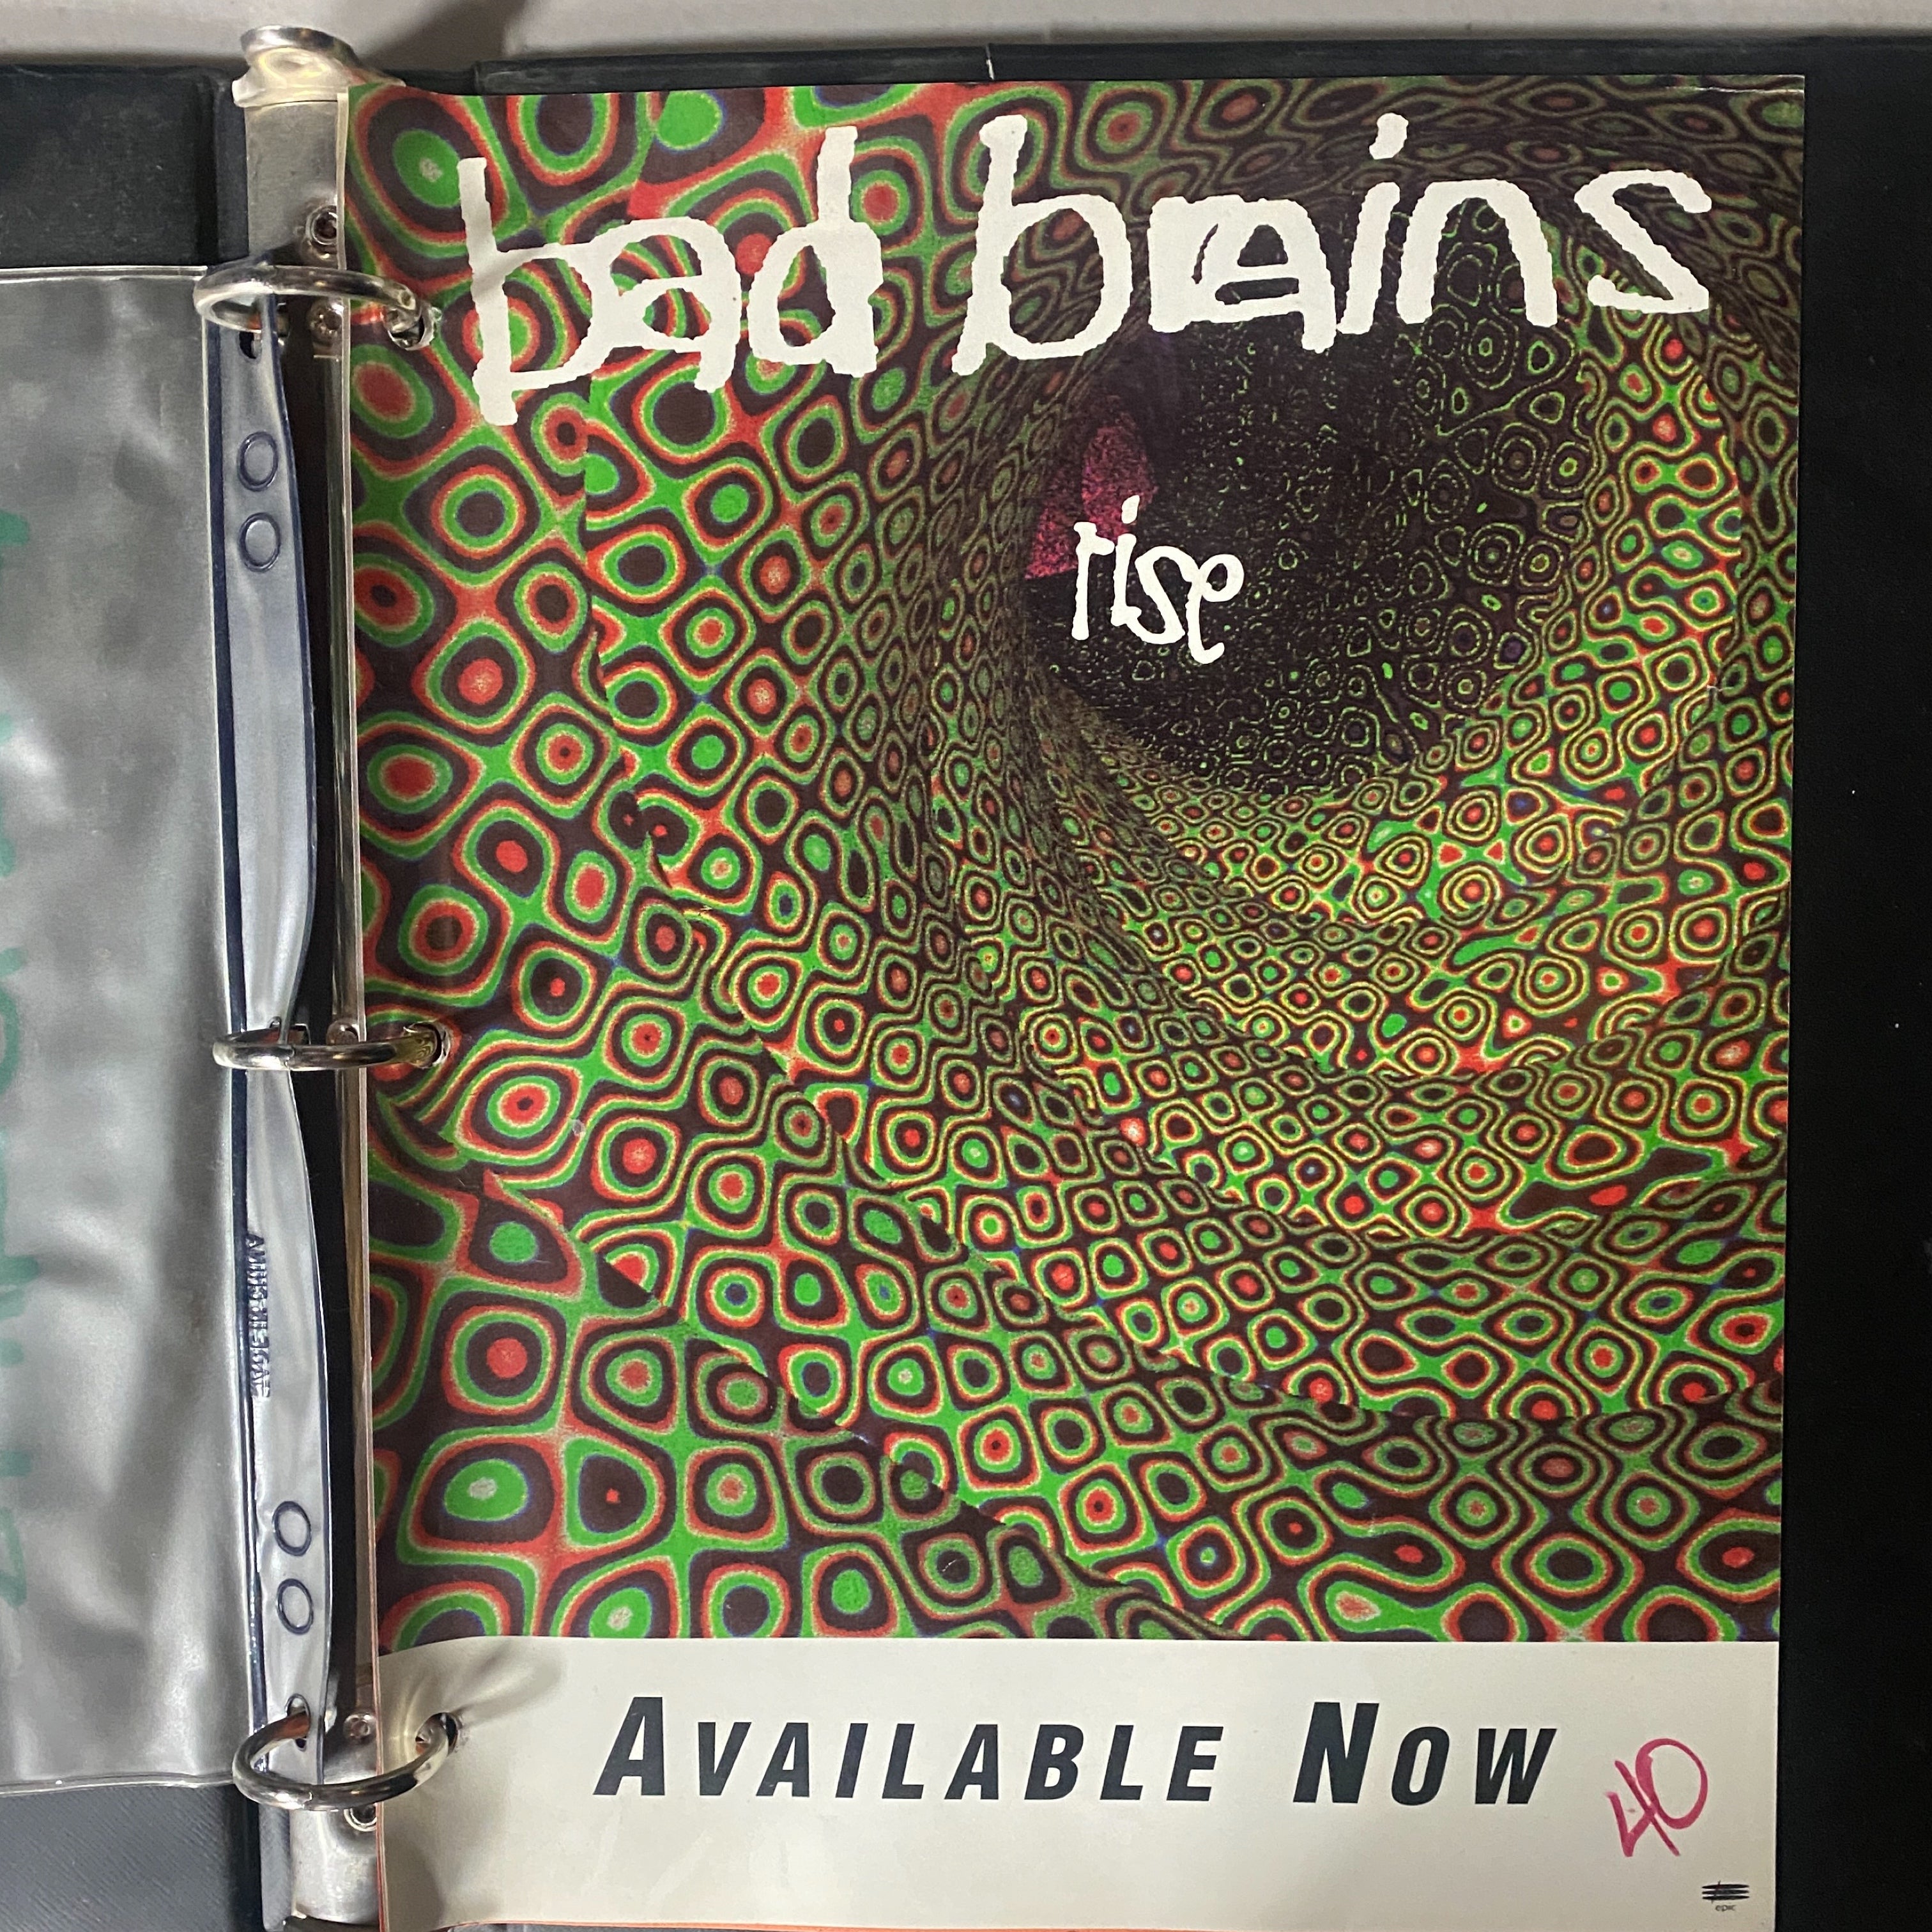 RISE - Album by Bad Brains